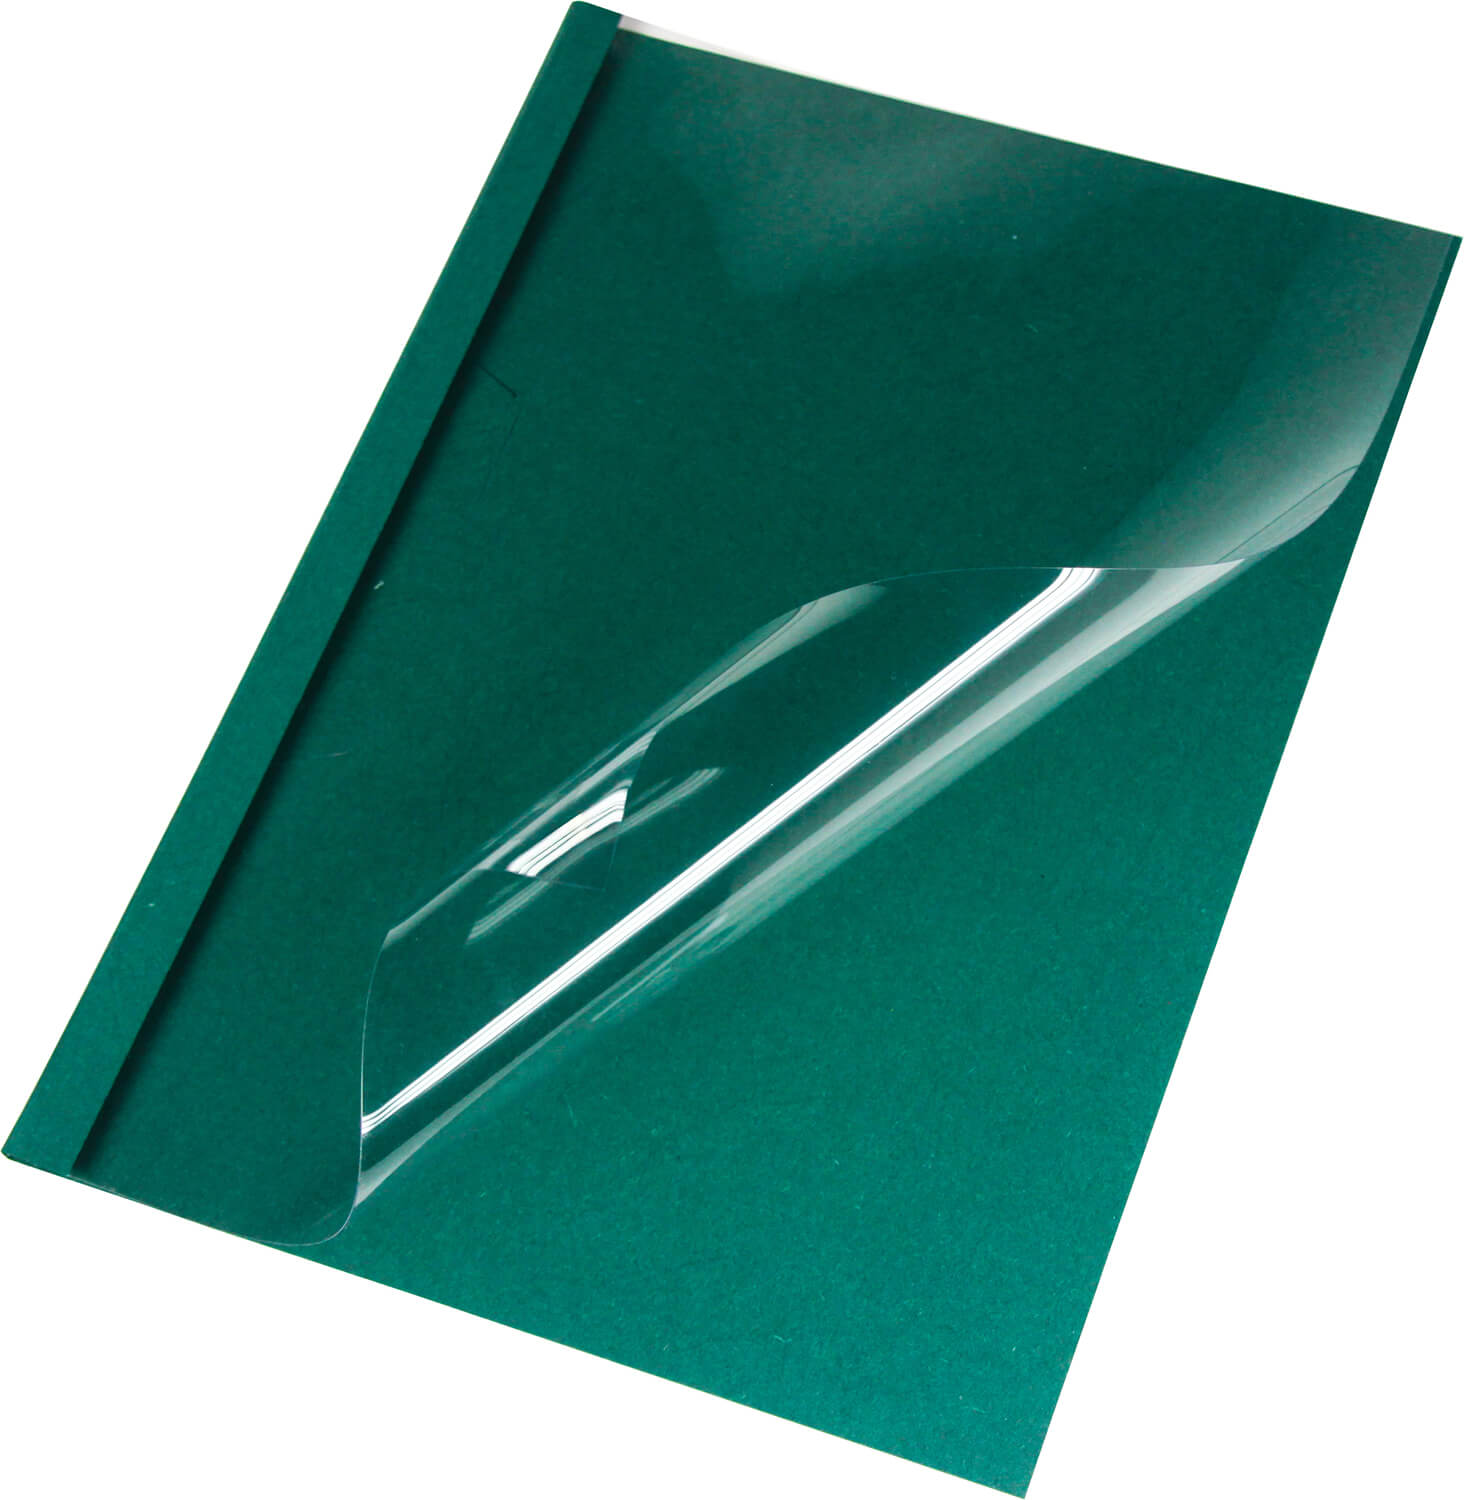 Klarsicht-Thermobindemappen A4 Lederstruktur grün 6 mm | Bestnr. LMG-BMDLM-GR-R6